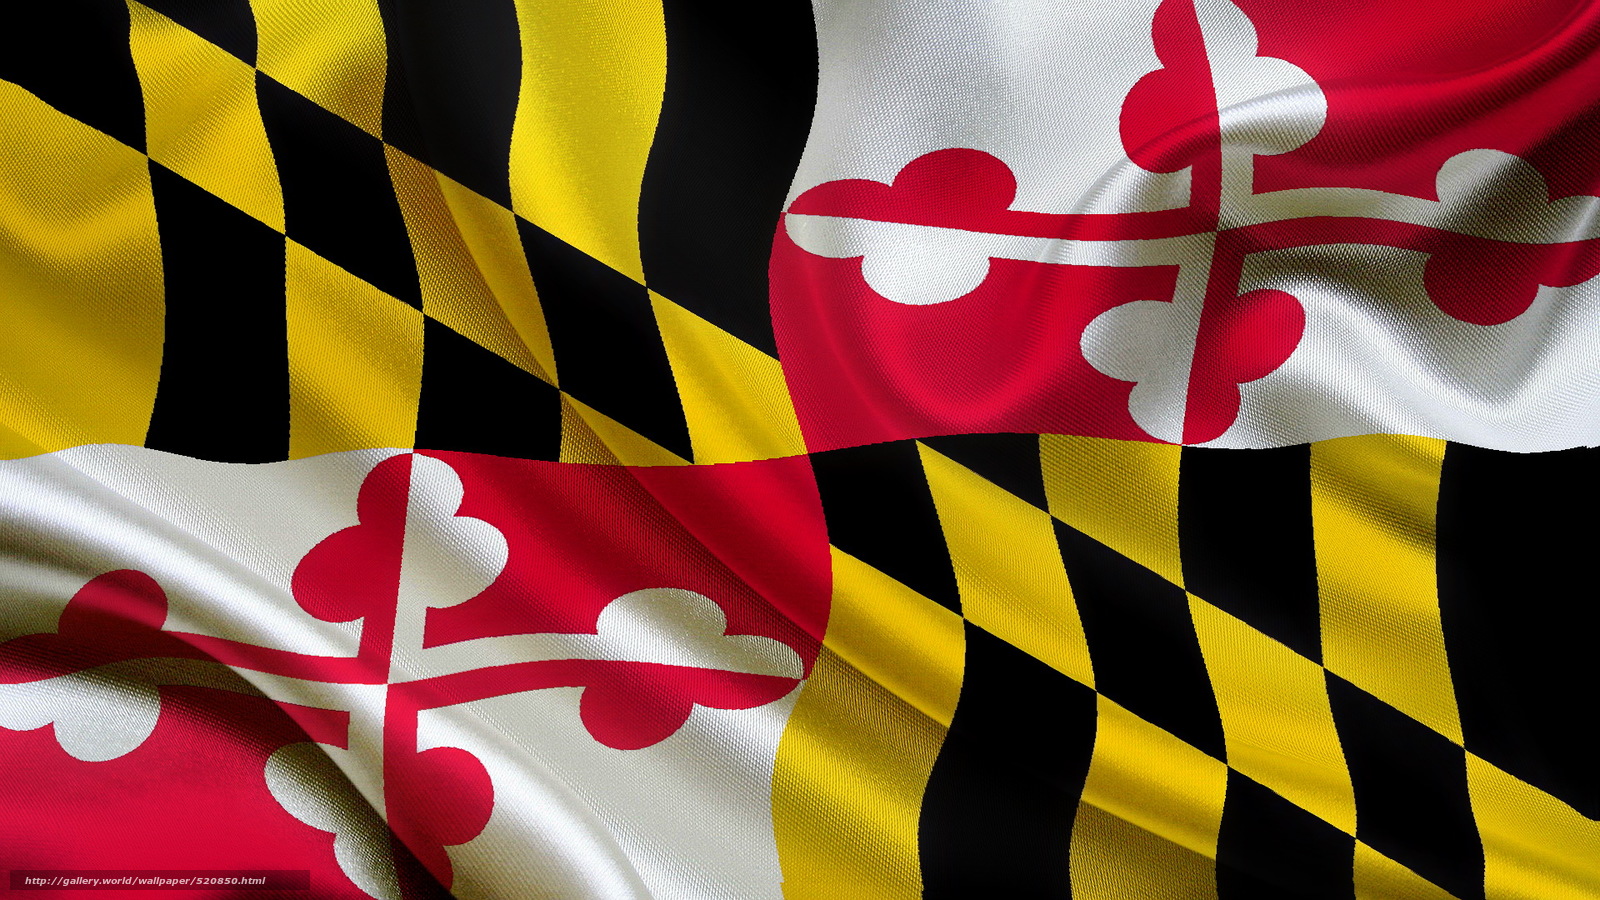 Download wallpaper flag State Maryland desktop wallpaper in the 1600x900